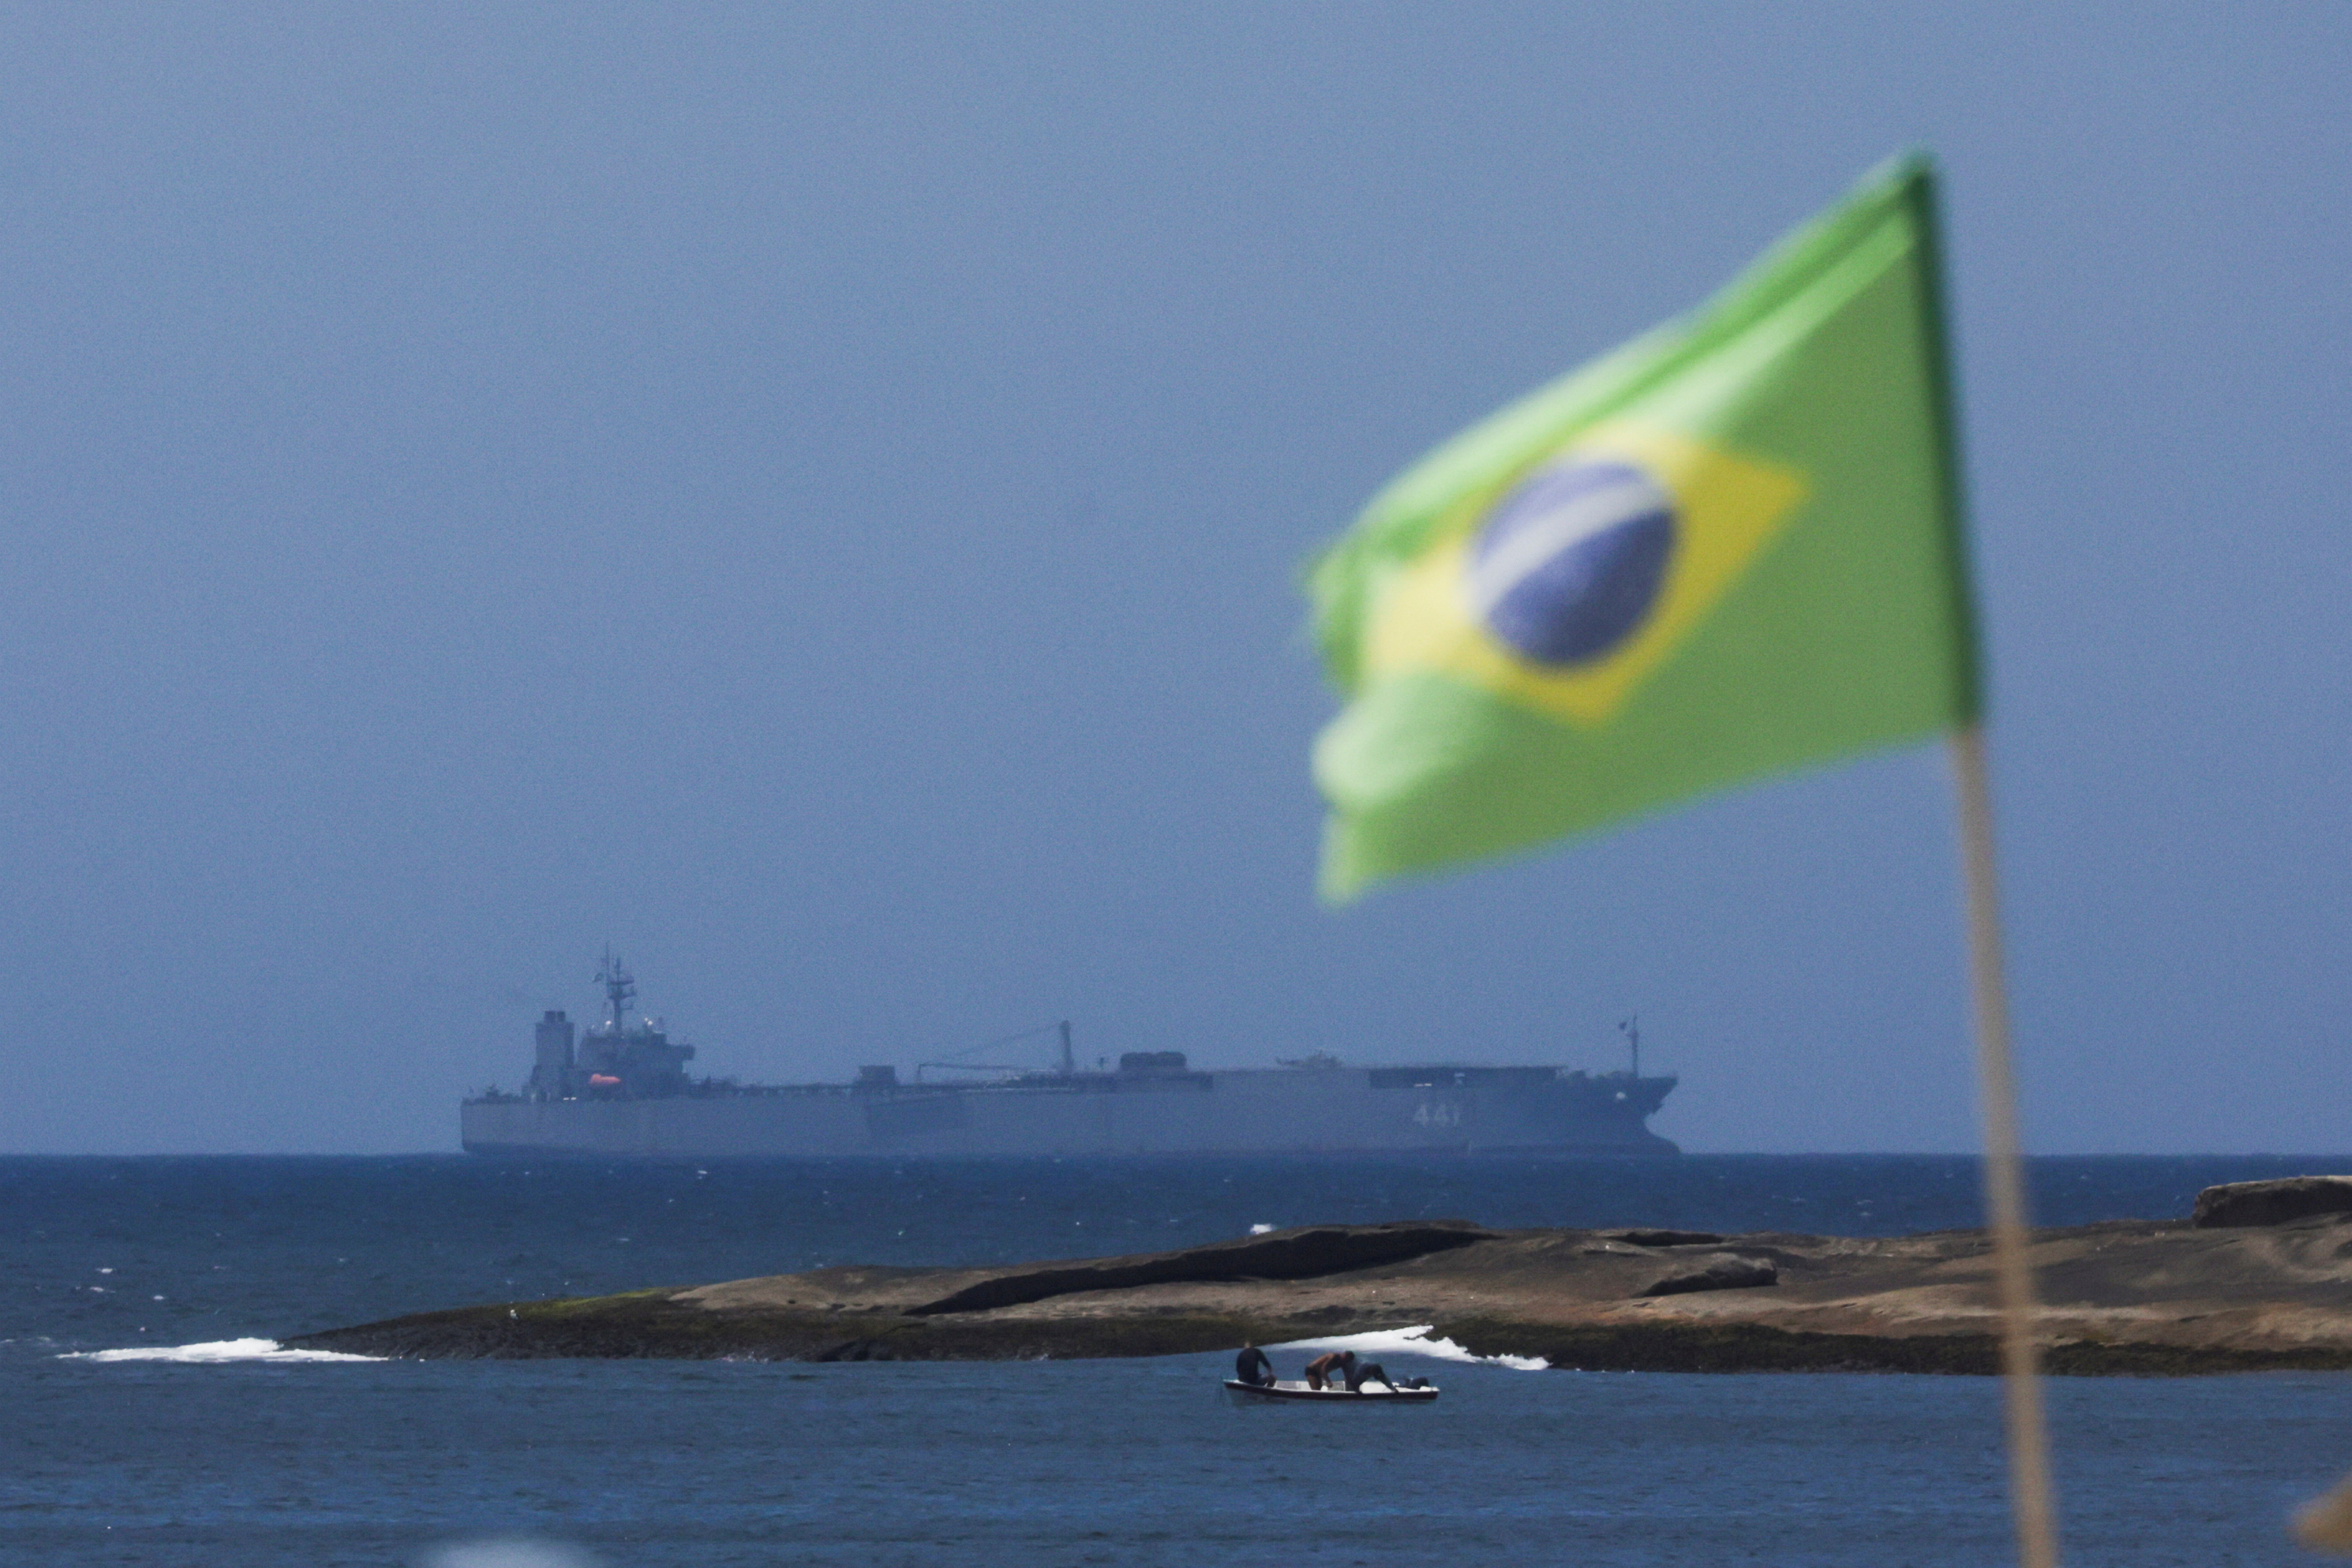 Iranian military ship Iris Makran navigates on the coast of Rio de Janeiro